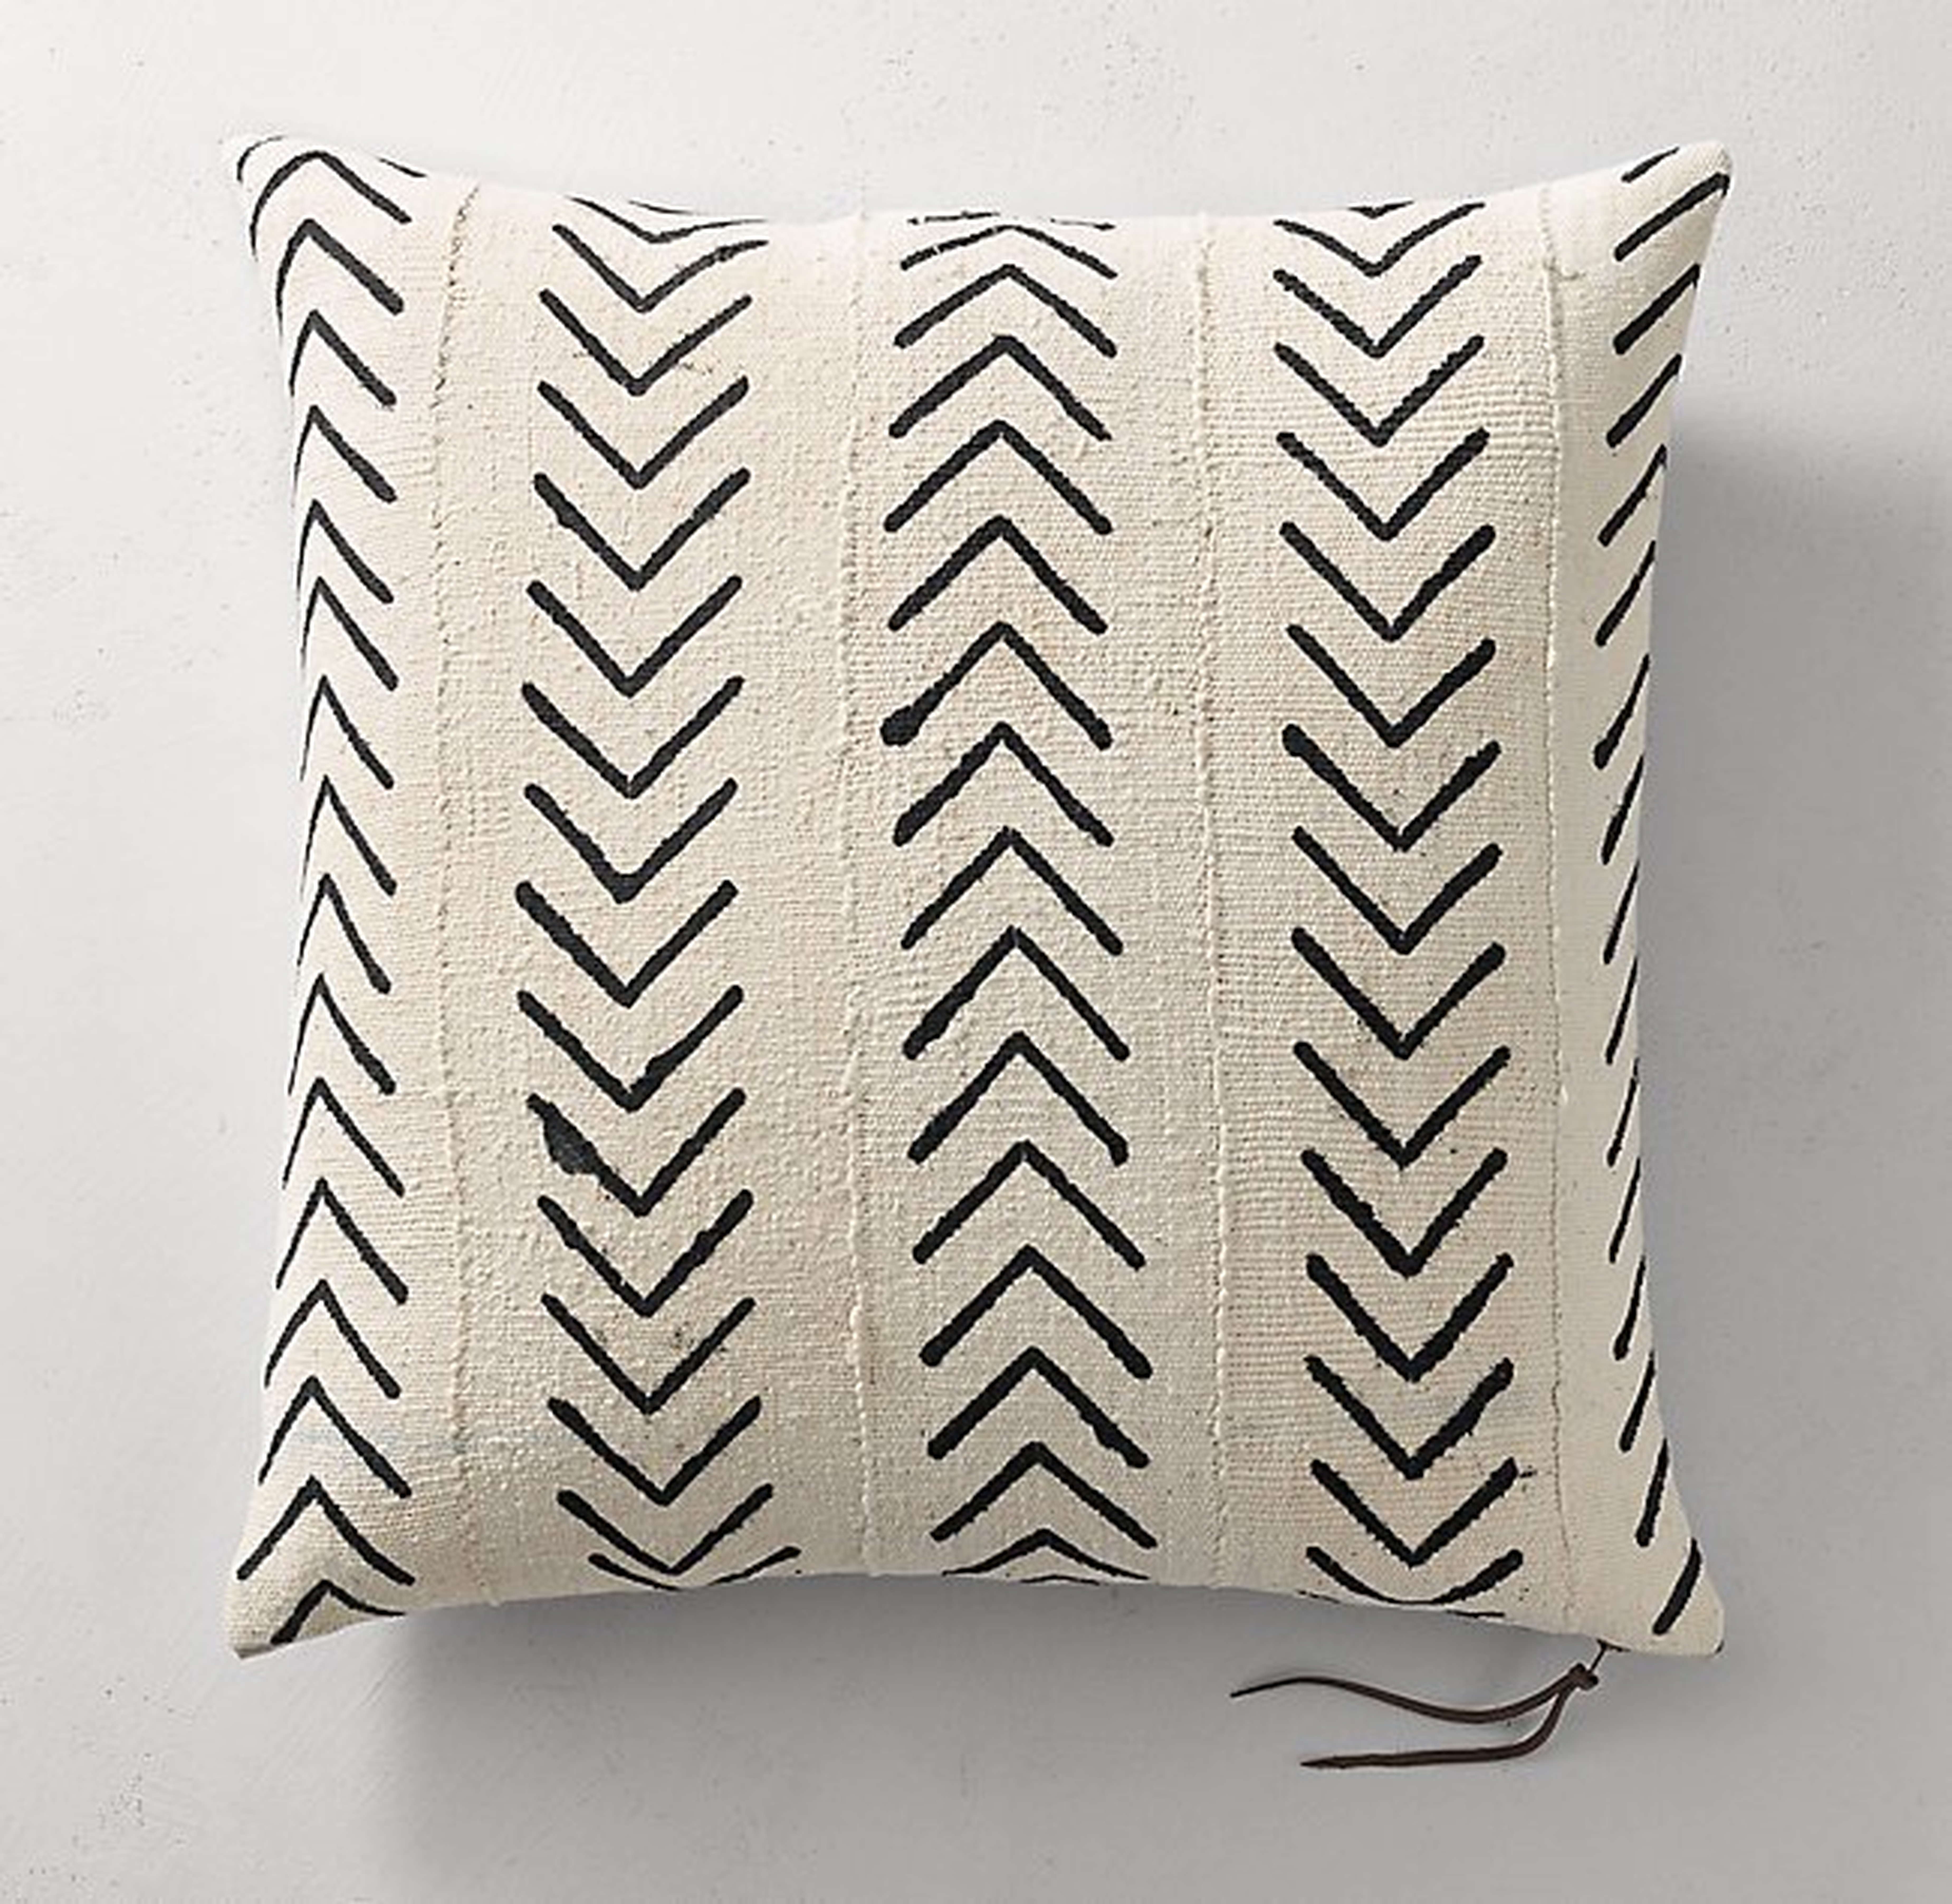 Handwoven African Mud Cloth Arrowhead Pillow Cover - Natural - 22" x 22" - No Insert - RH